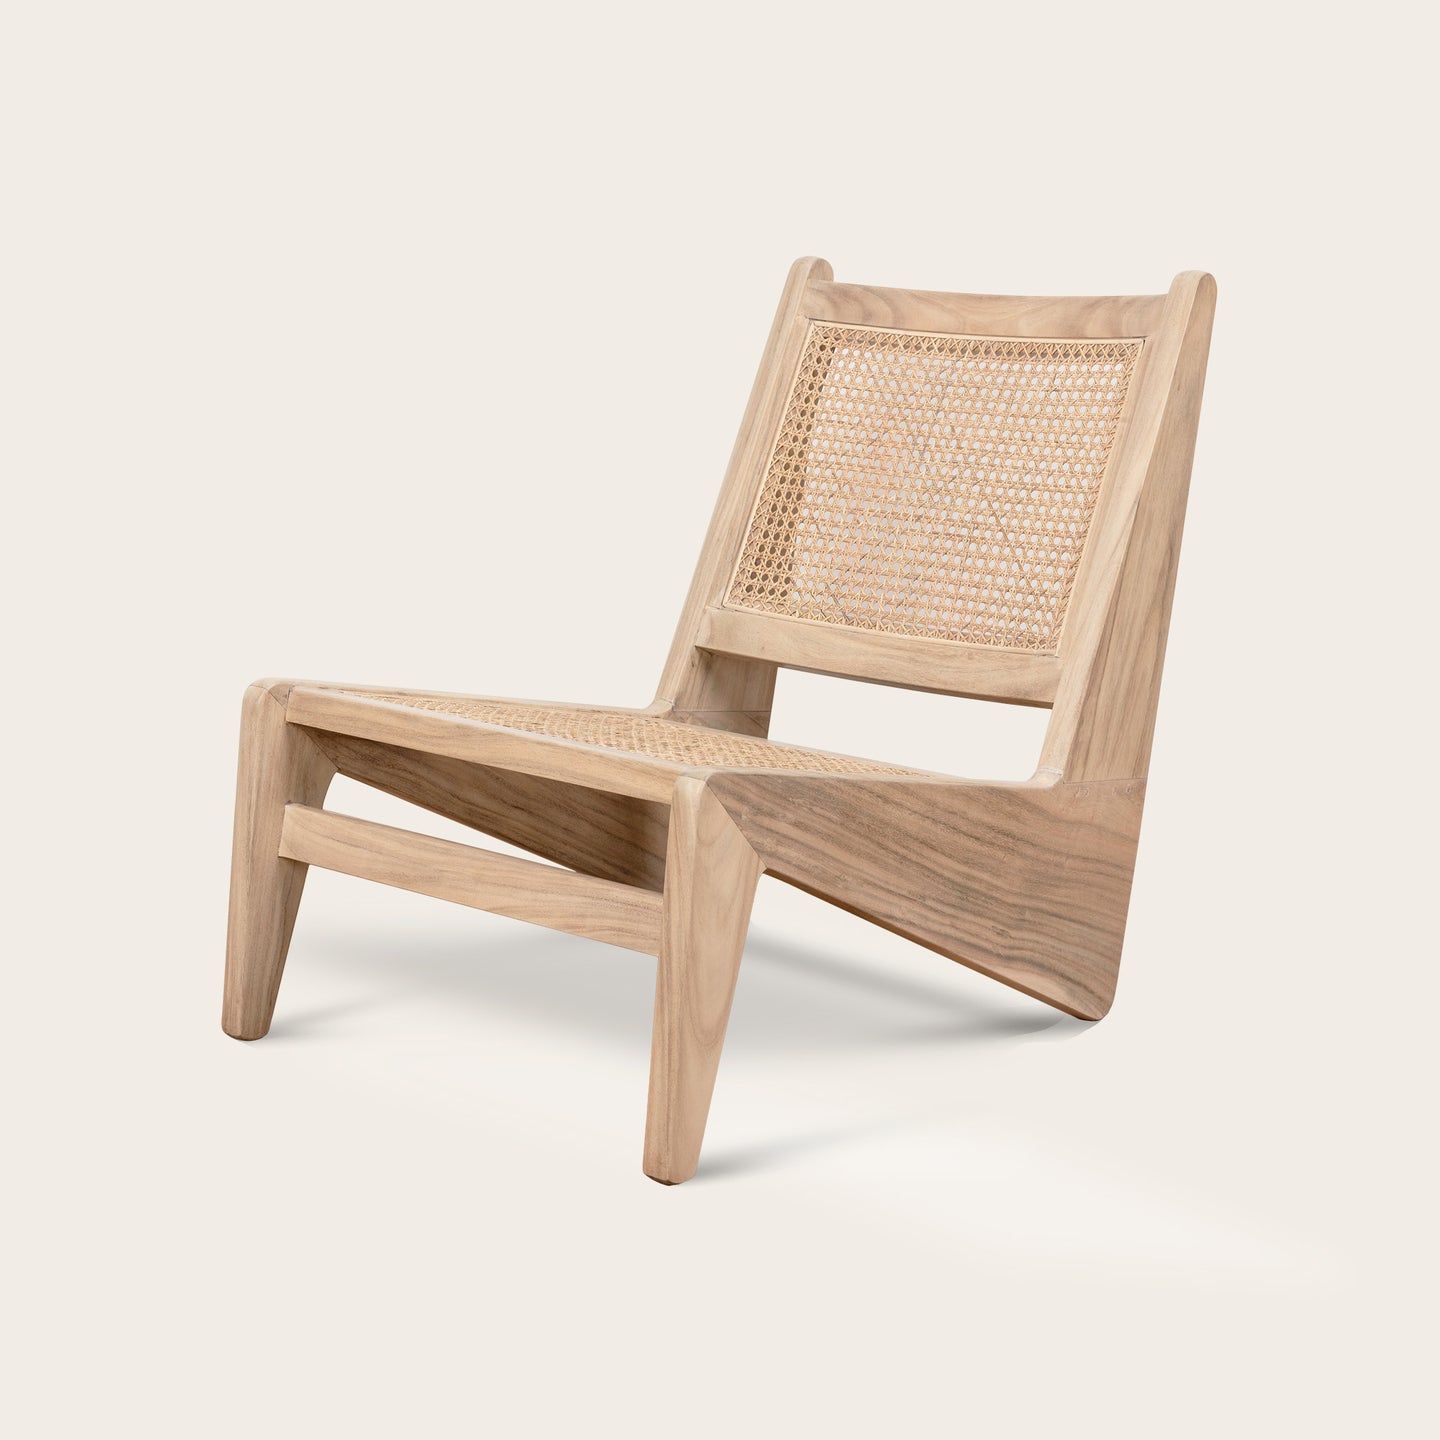 Pierre Jeanneret Kangaroo Chair - Washed Teak